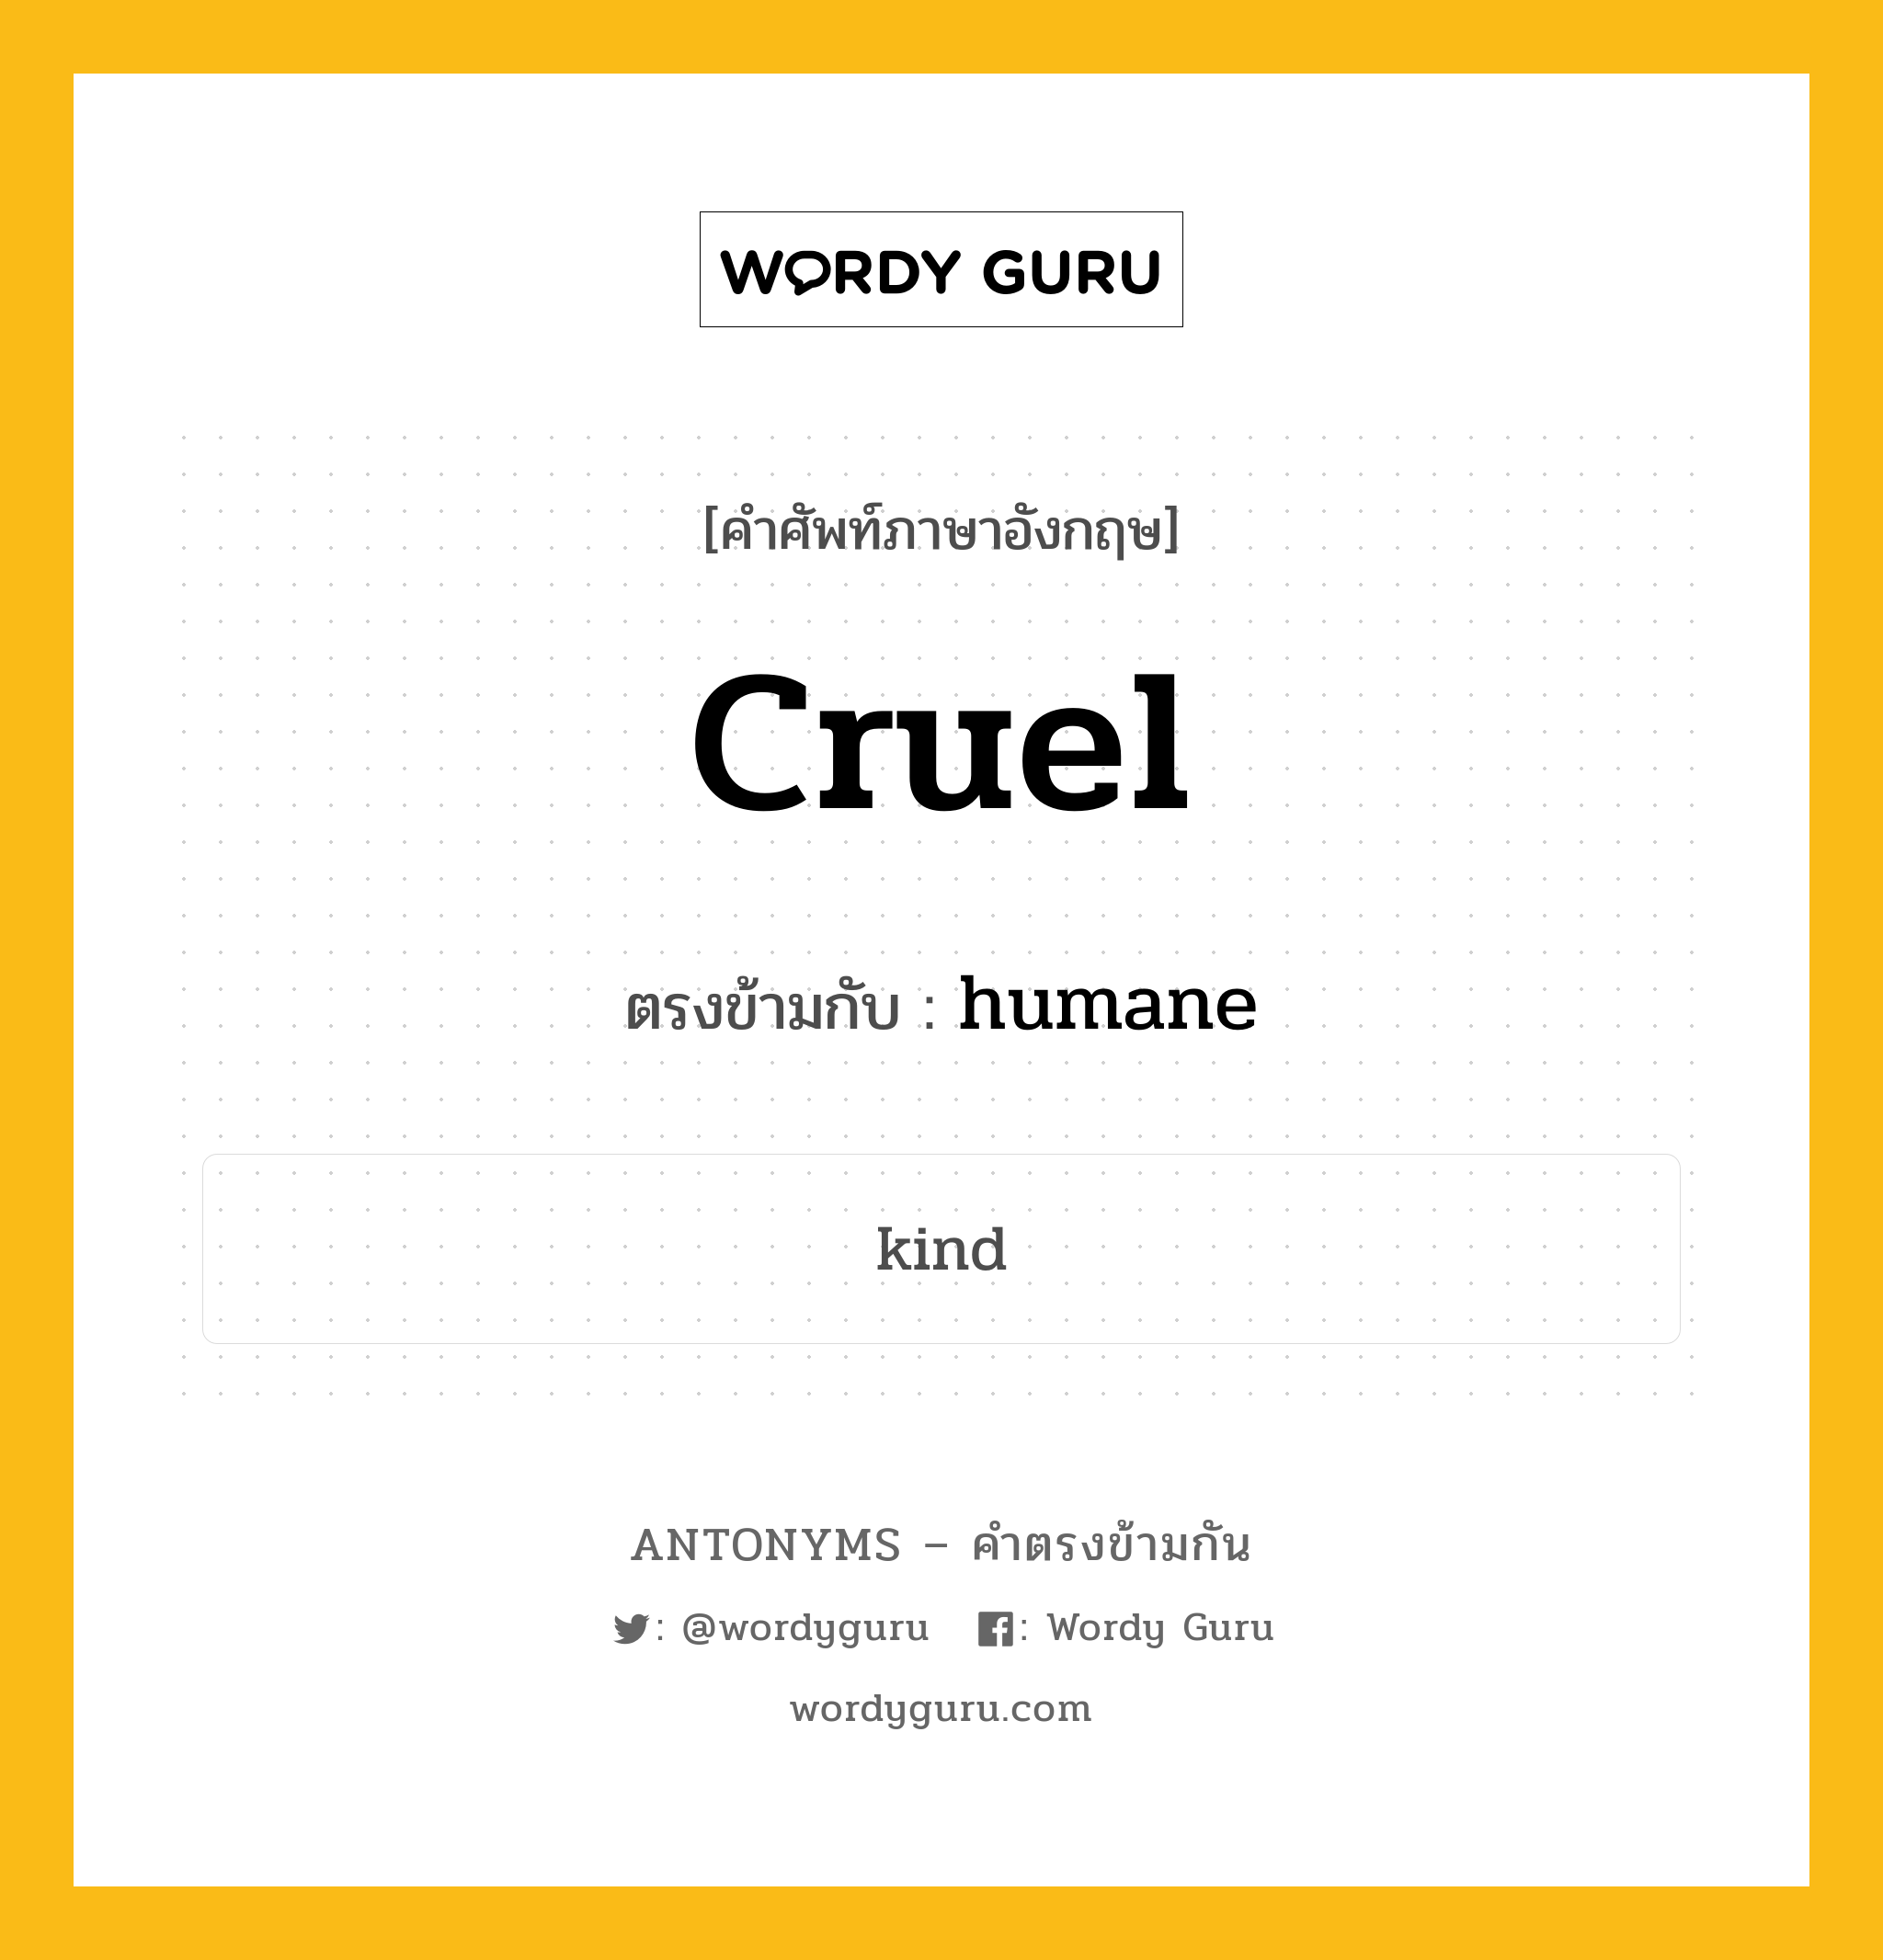 cruel เป็นคำตรงข้ามกับคำไหนบ้าง?, คำศัพท์ภาษาอังกฤษ cruel ตรงข้ามกับ humane หมวด humane